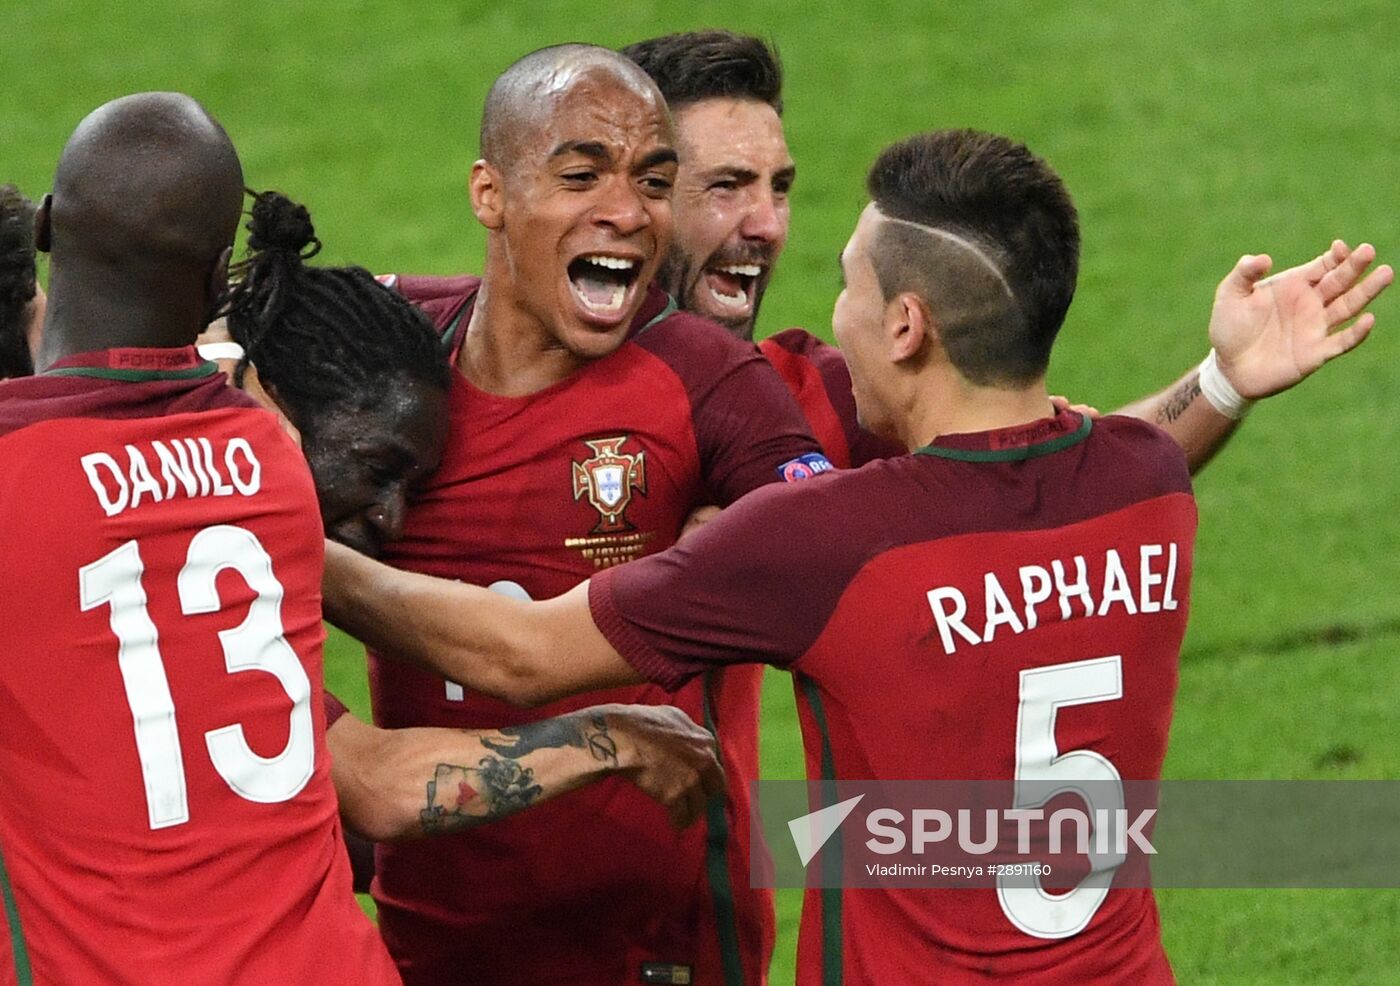 Euro 2016 Preview, Portugal